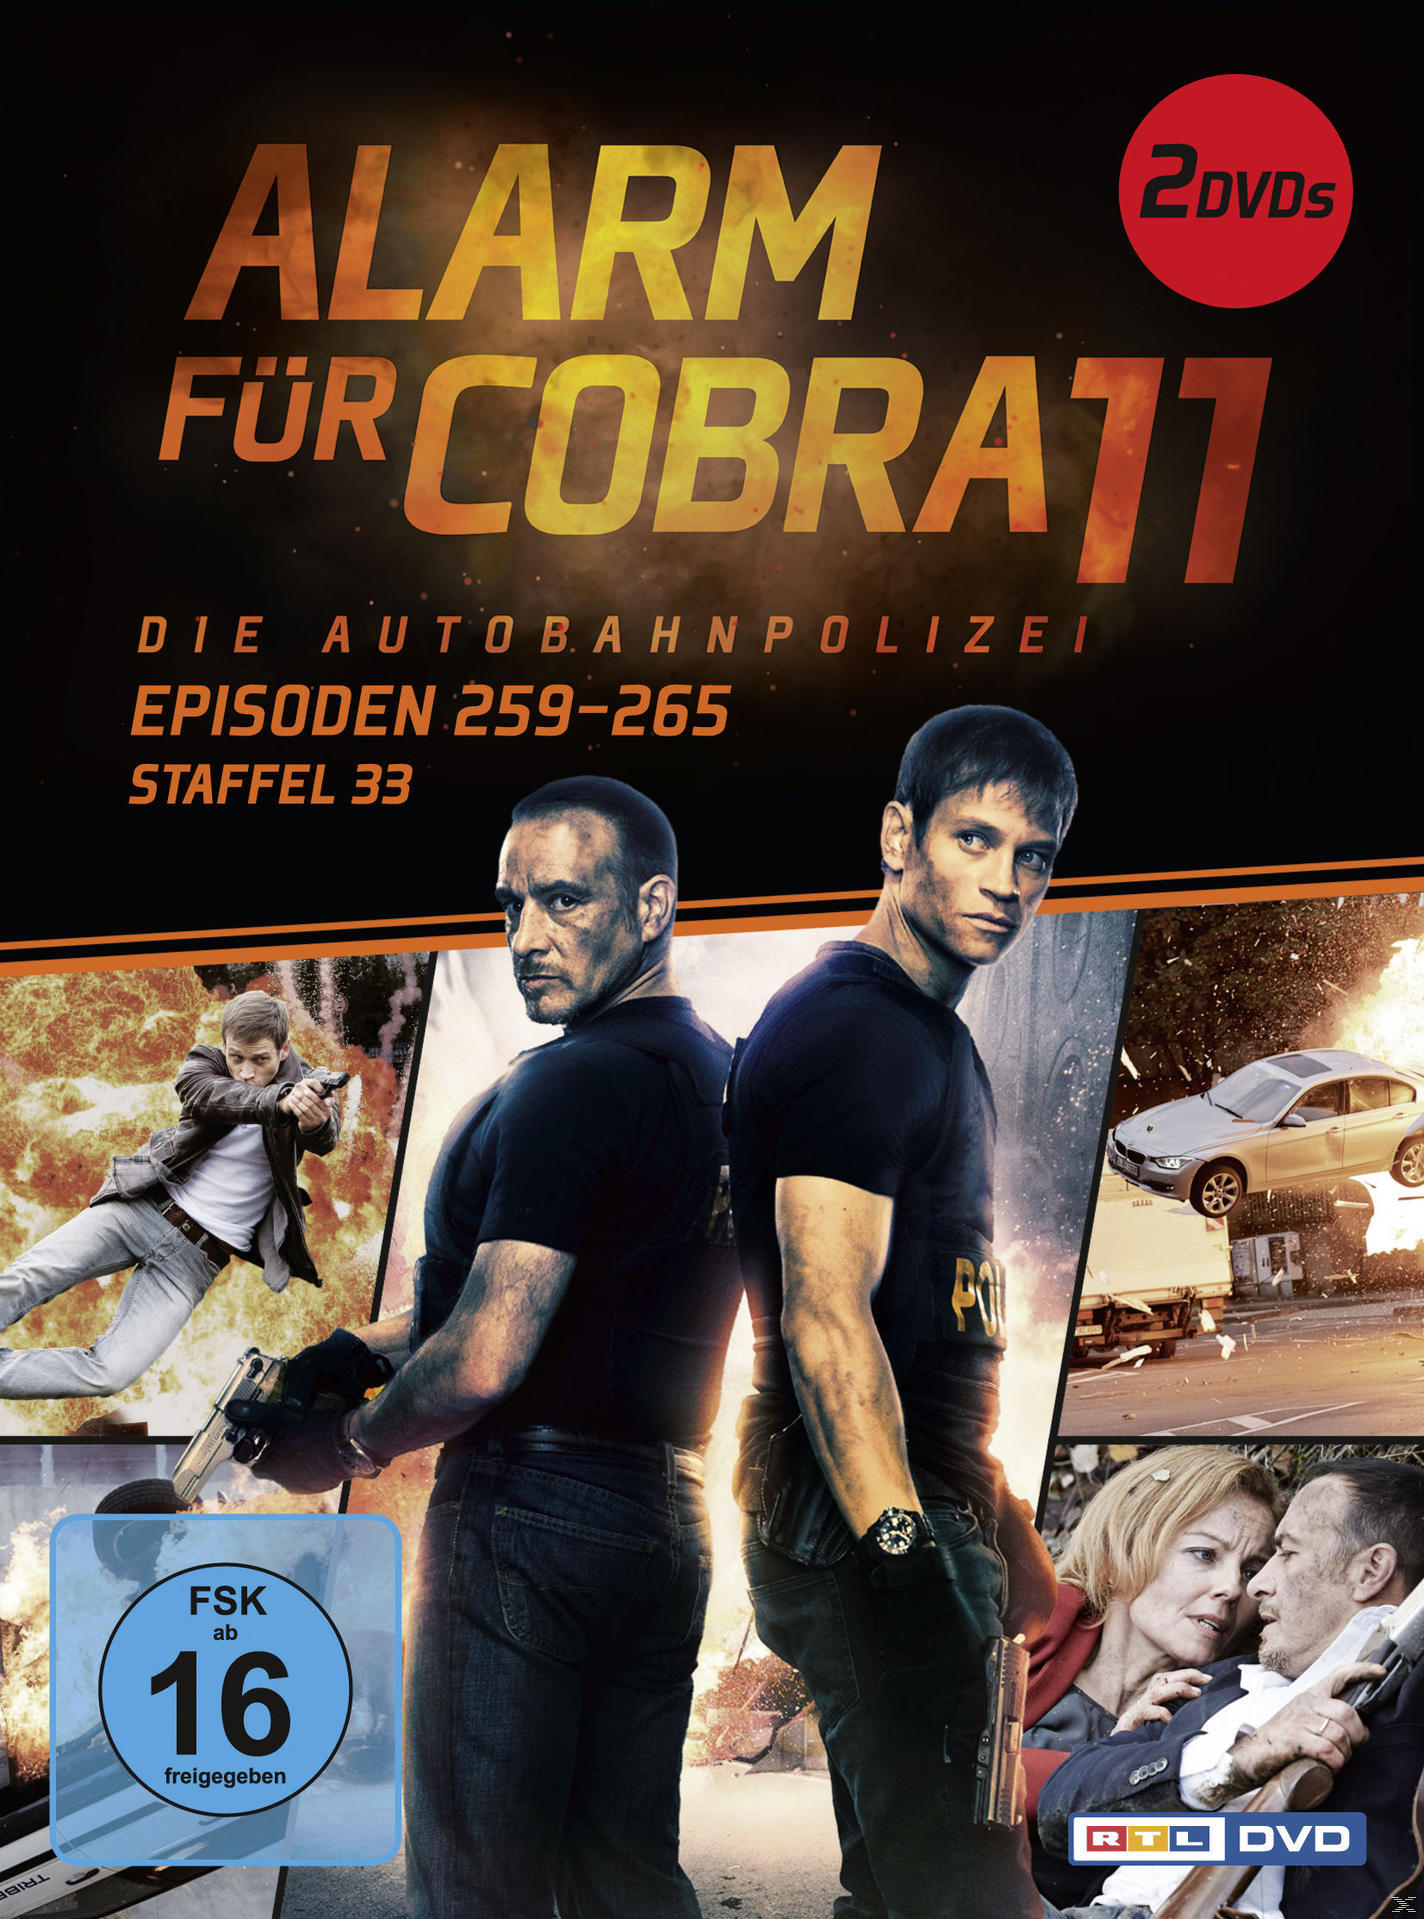 Alarm für 259 11 - - Cobra DVD Staffel 33 265) (Folge